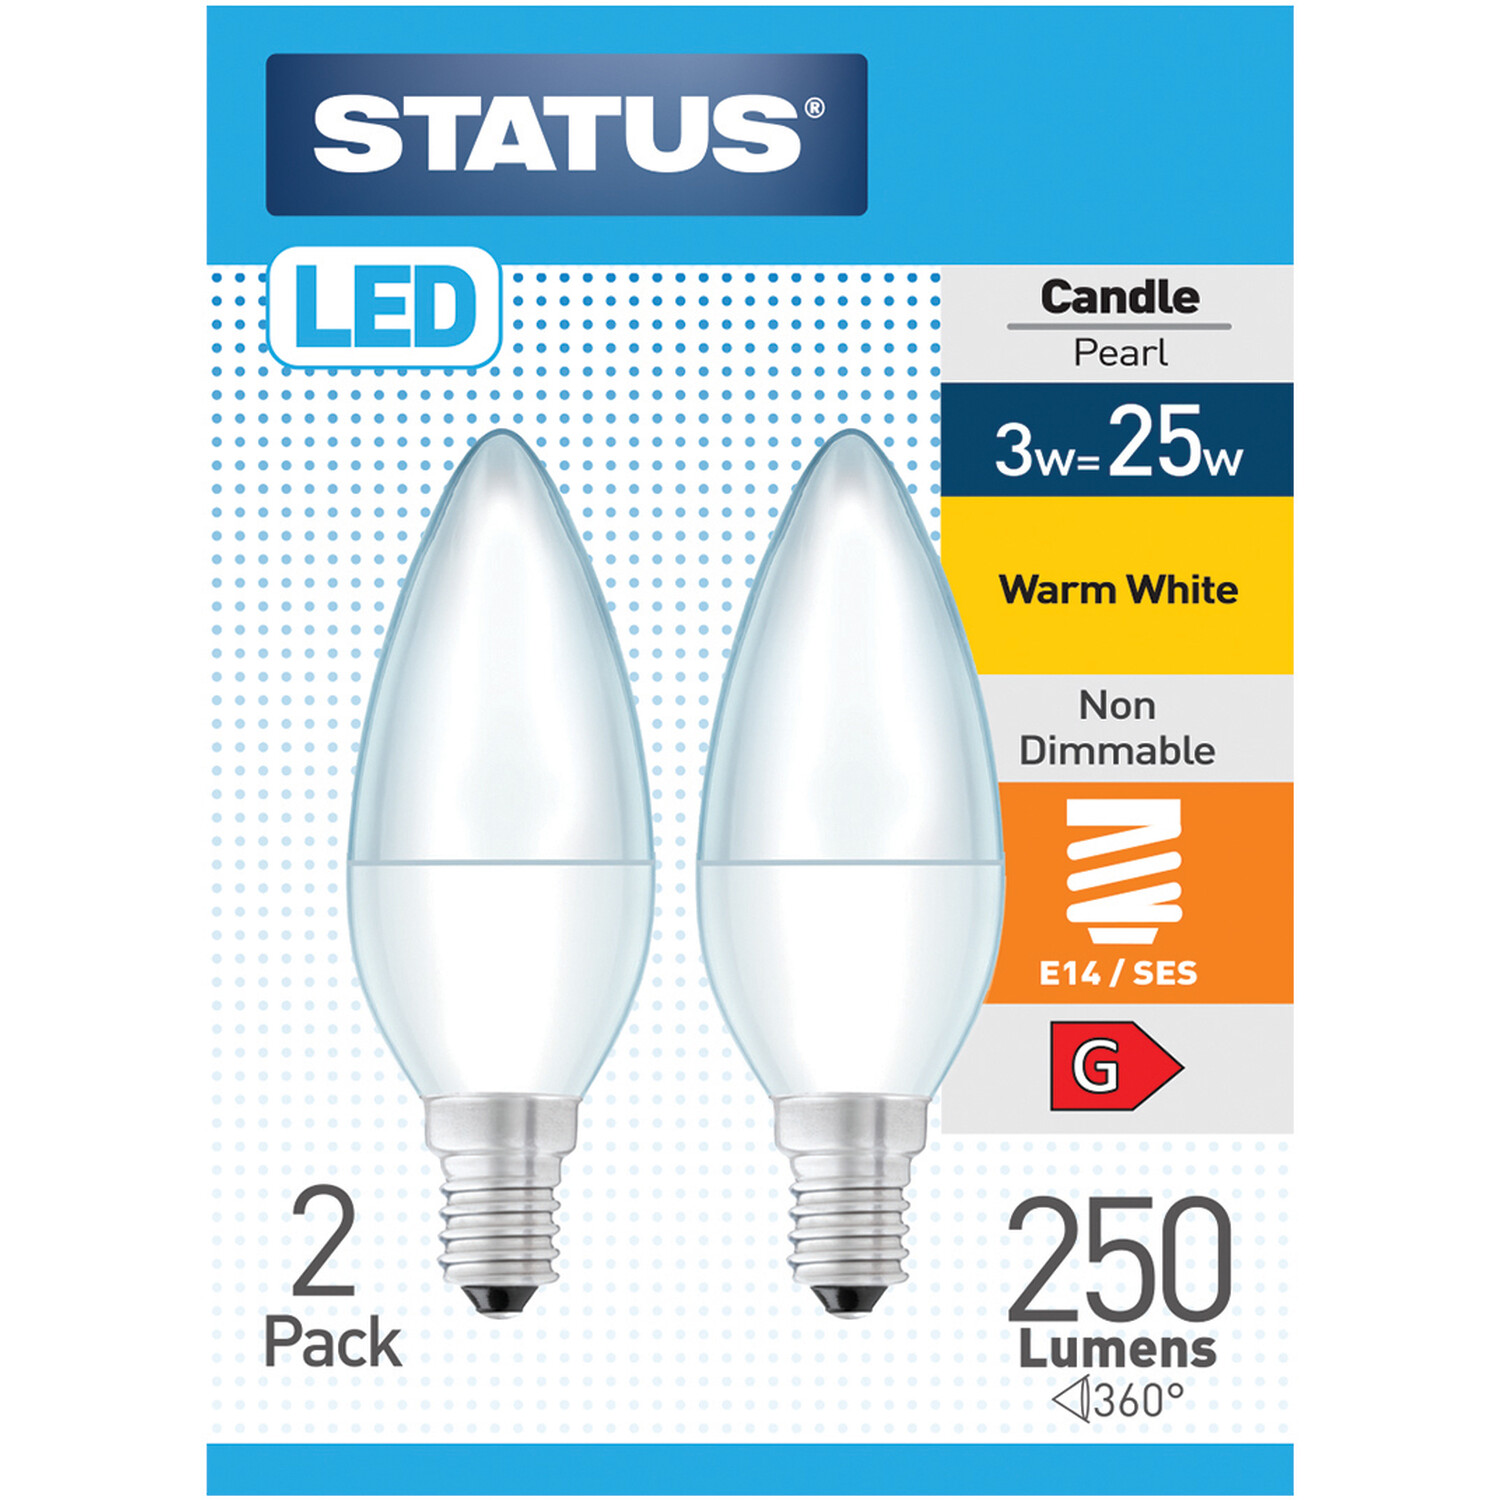 Status 2 Pack SES LED 250 Lumens Candle Light Bulbs Image 1